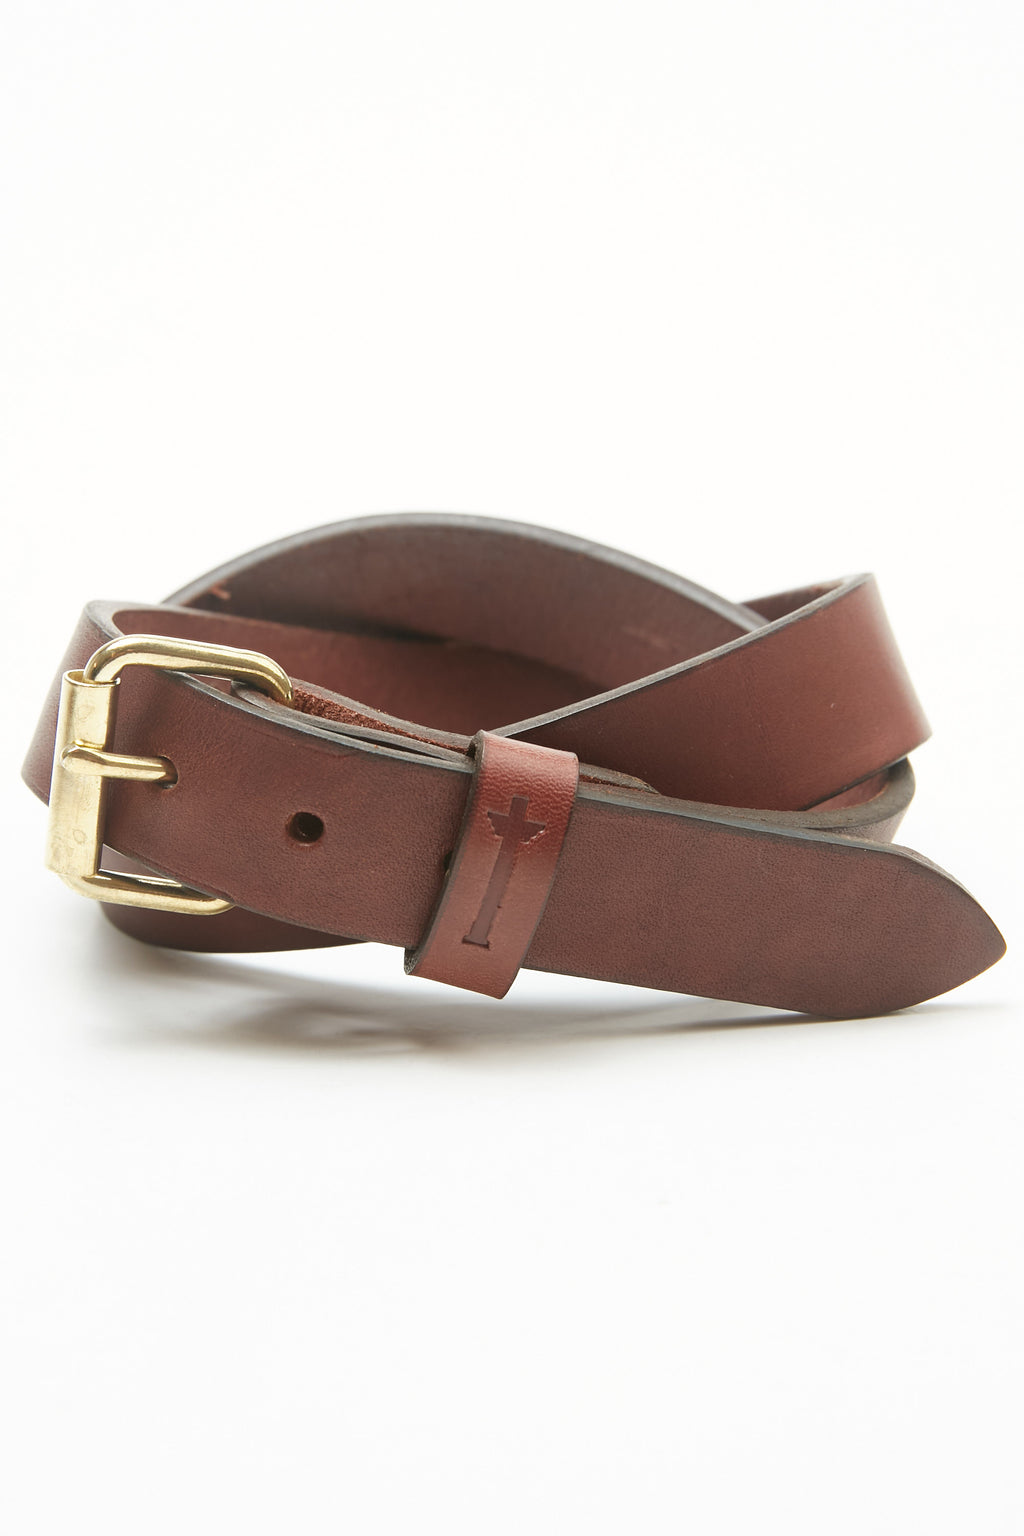 Totem Brand Co. Leather Belt 1.25" (Brown)